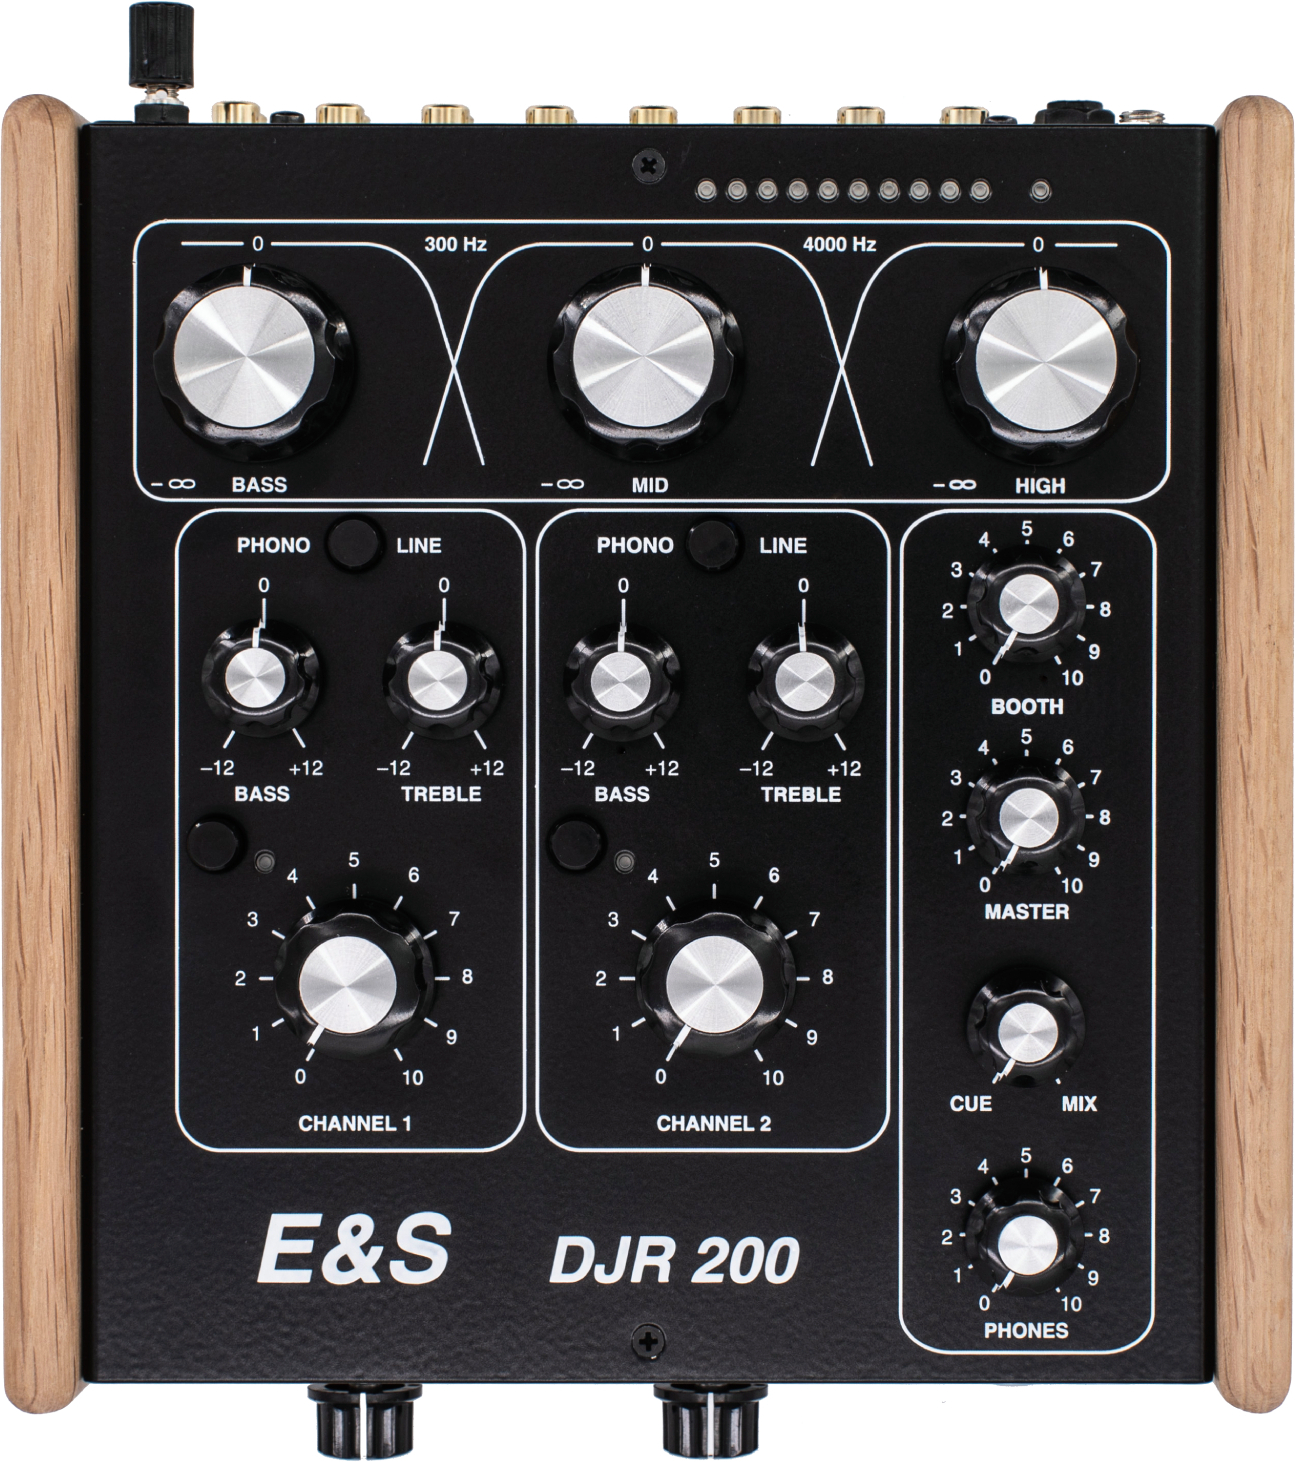 E&s Djr 200 - DJ mixer - Main picture